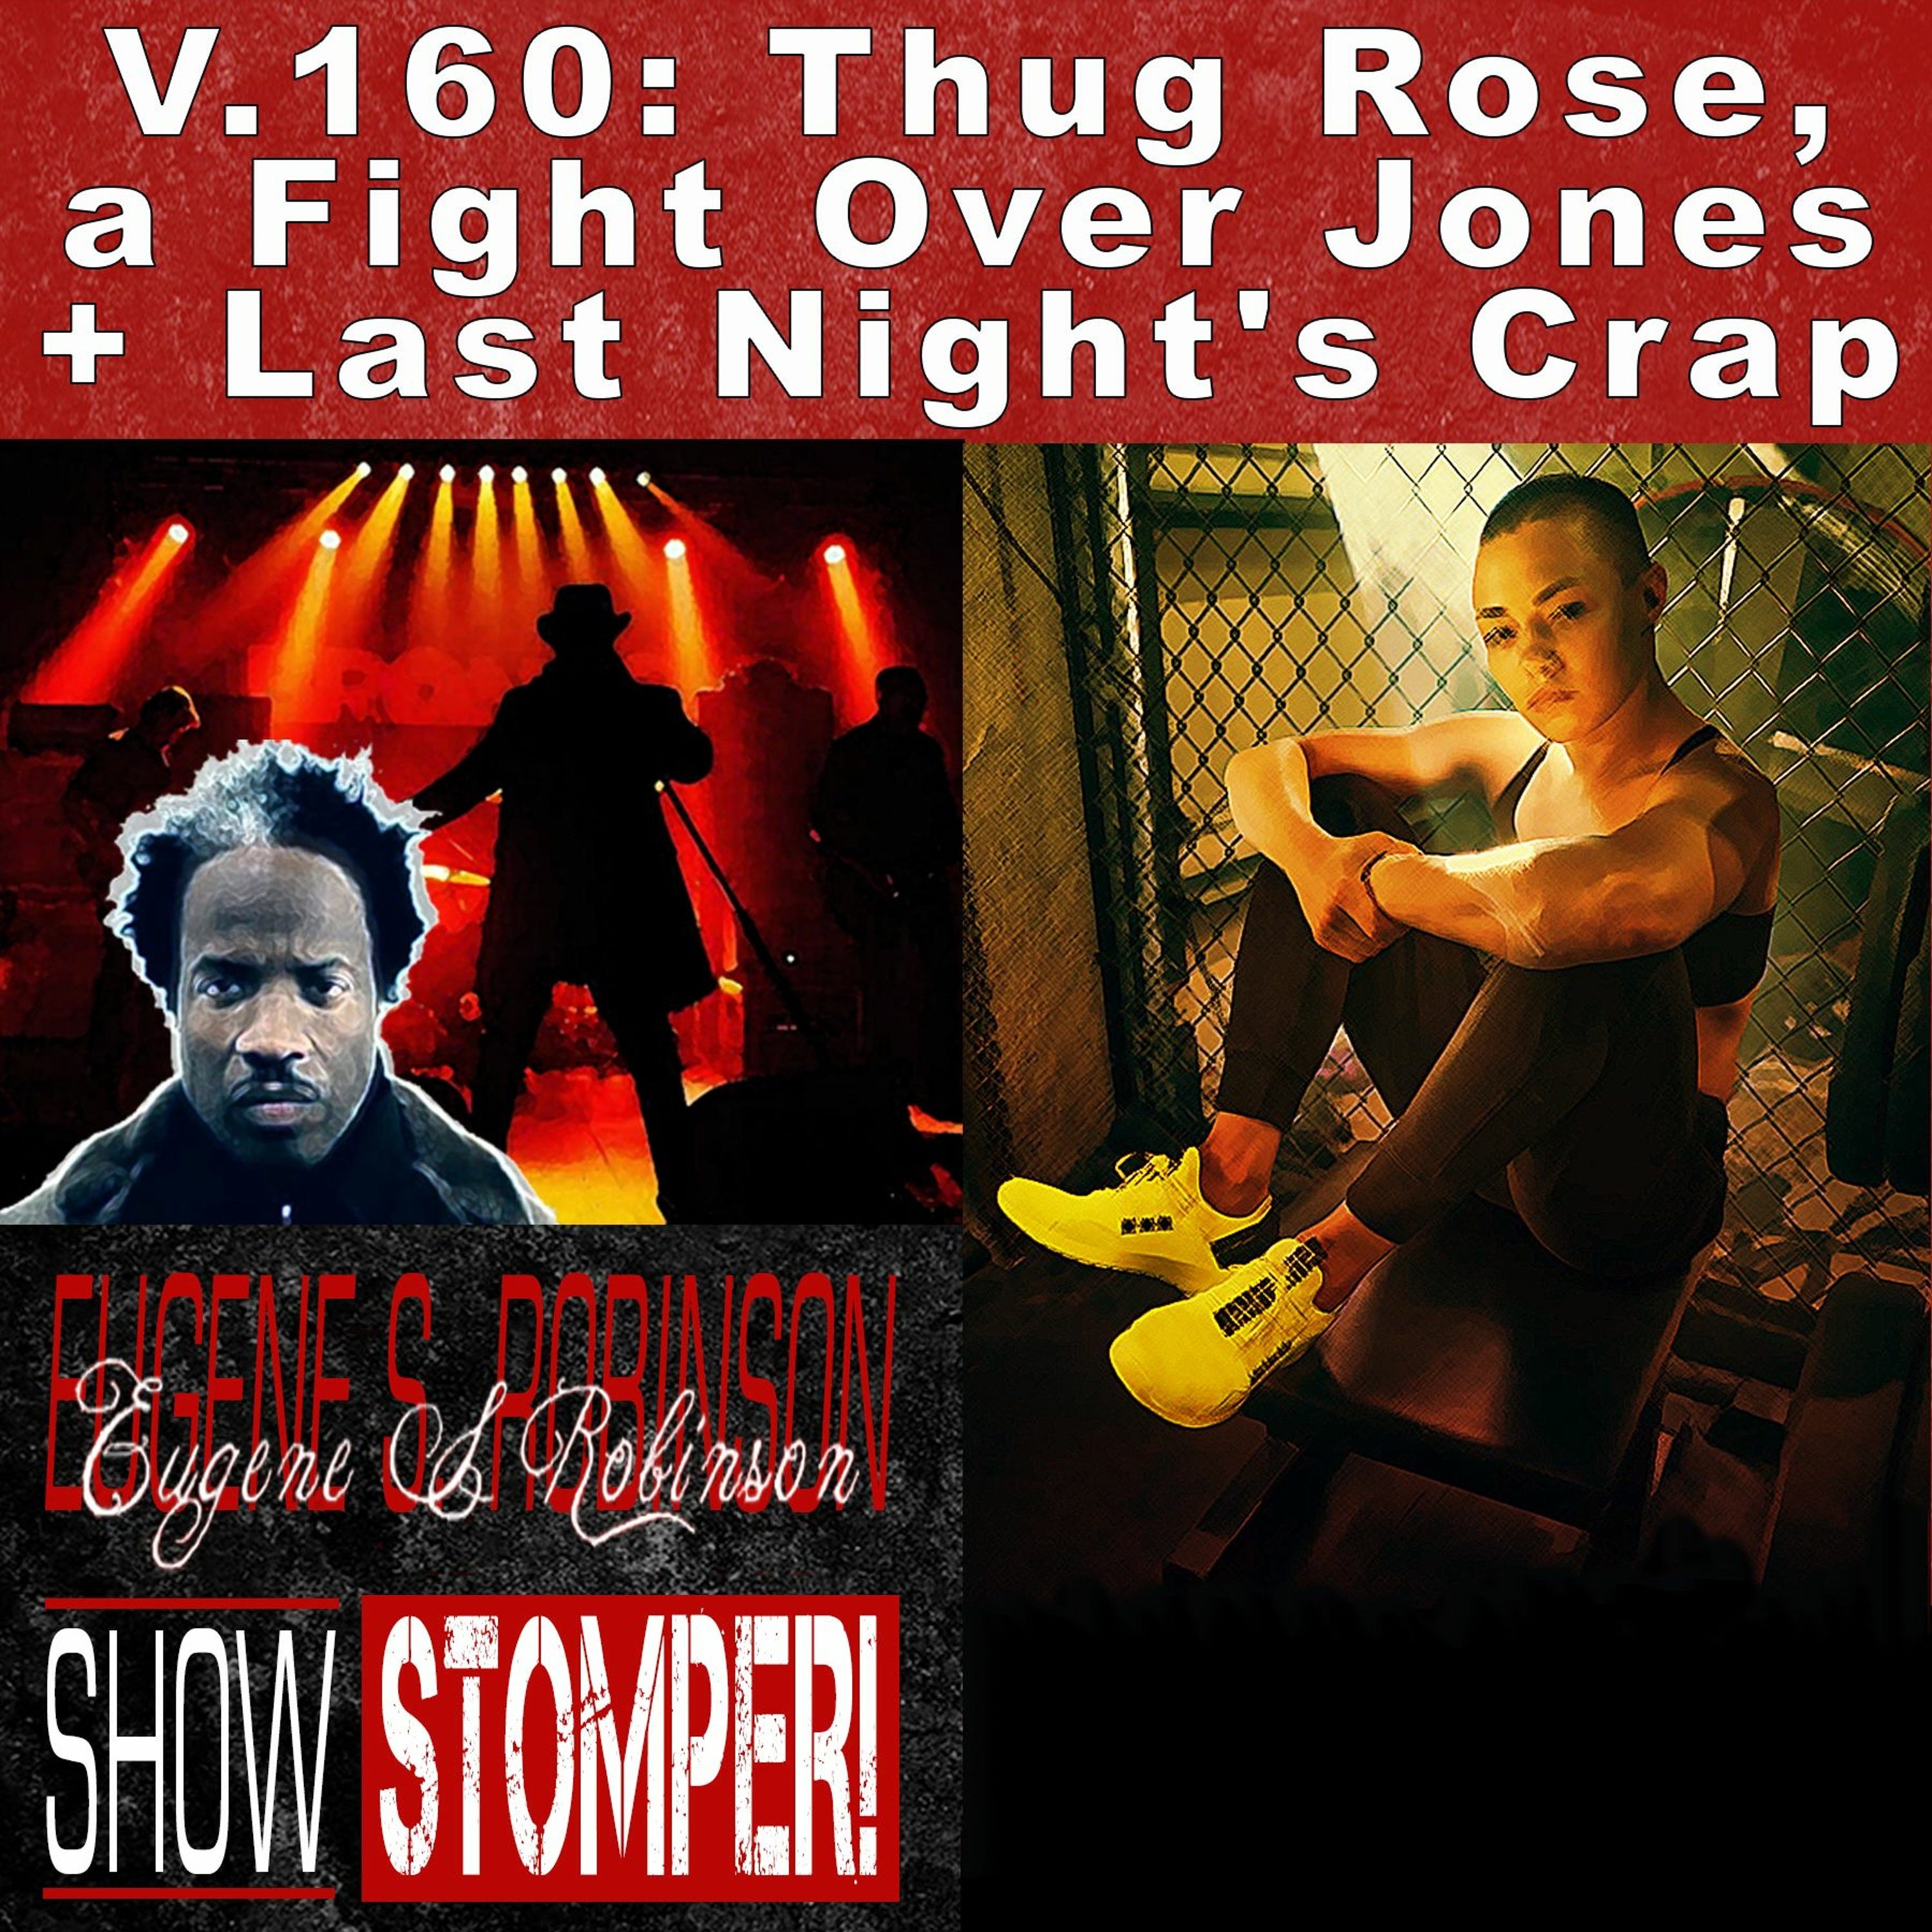 V.160 Thug Rose, A Fight Over Jones + Last Night's Crap On The Eugene S. Robinson Show Stomper!